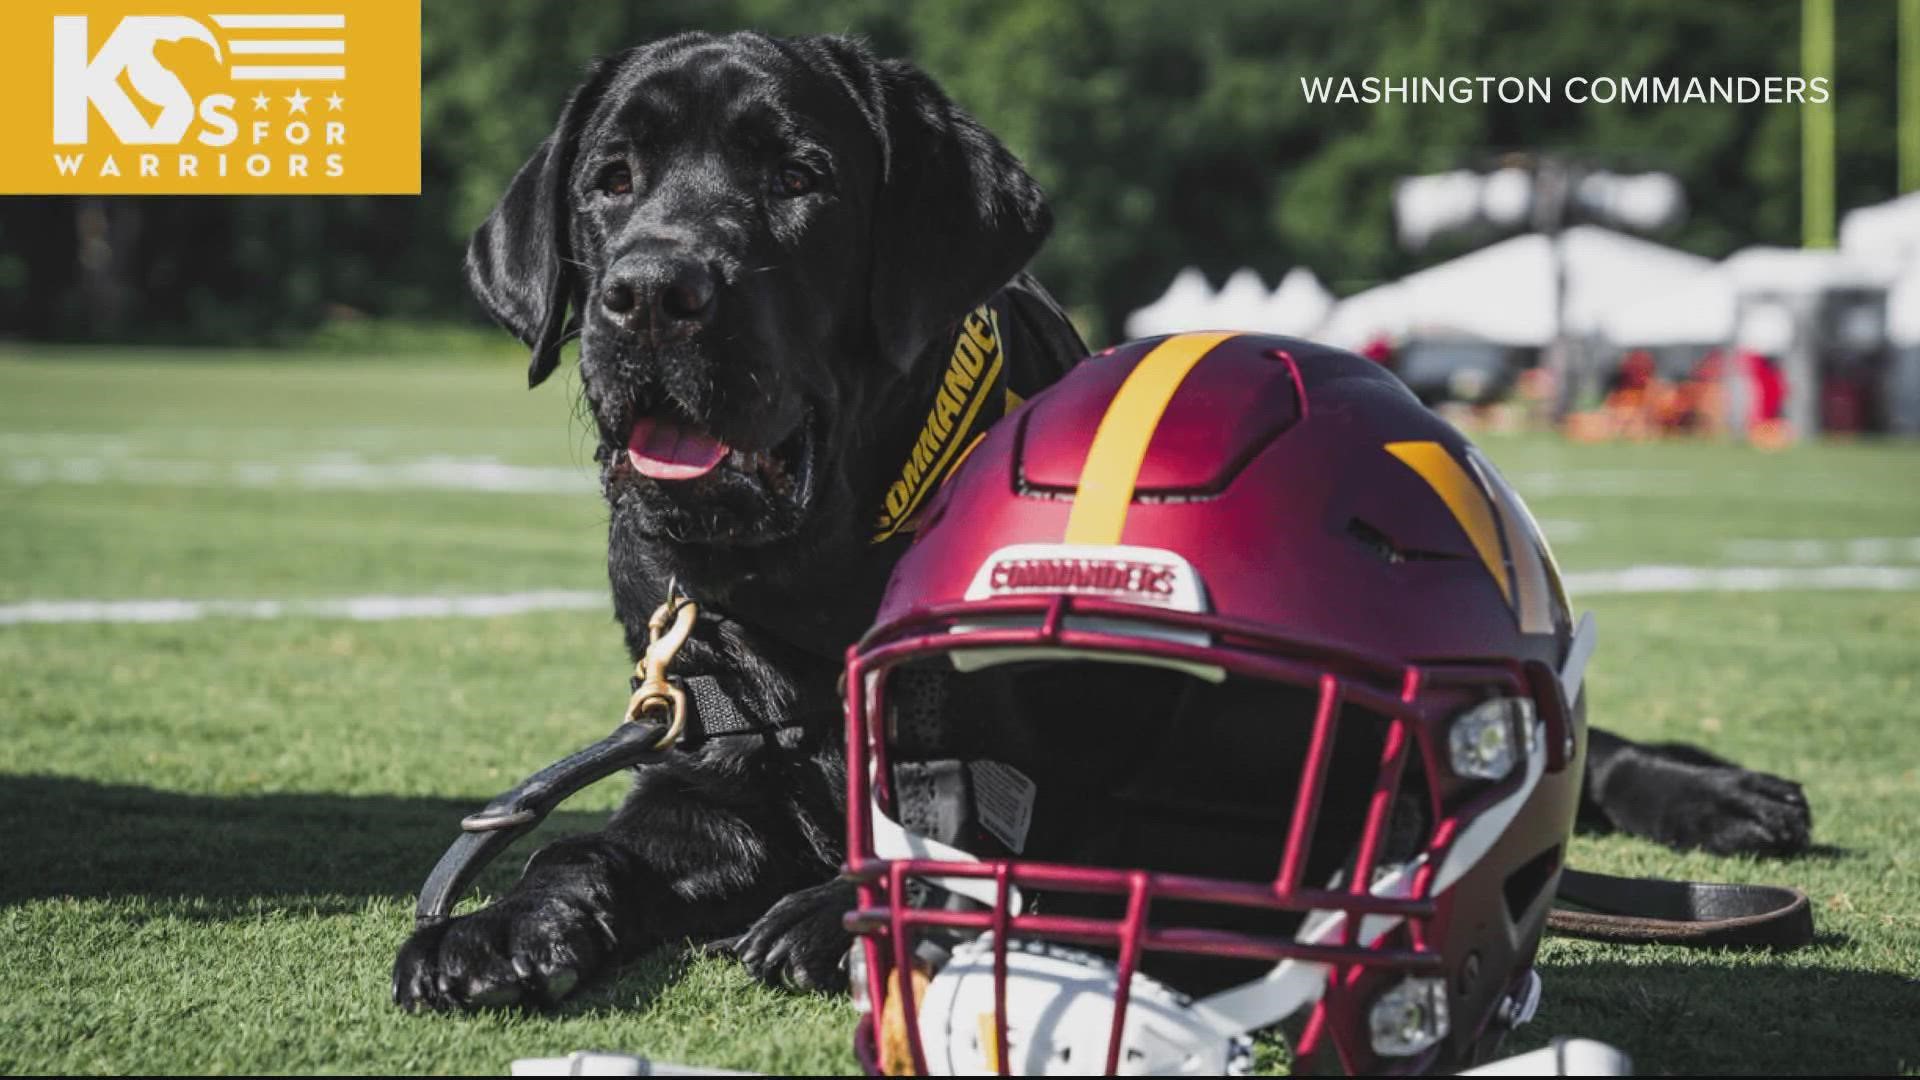 The Washington Commanders will introduce Mando as their team dog ahead of their season opener against the Jacksonville Jaguars.